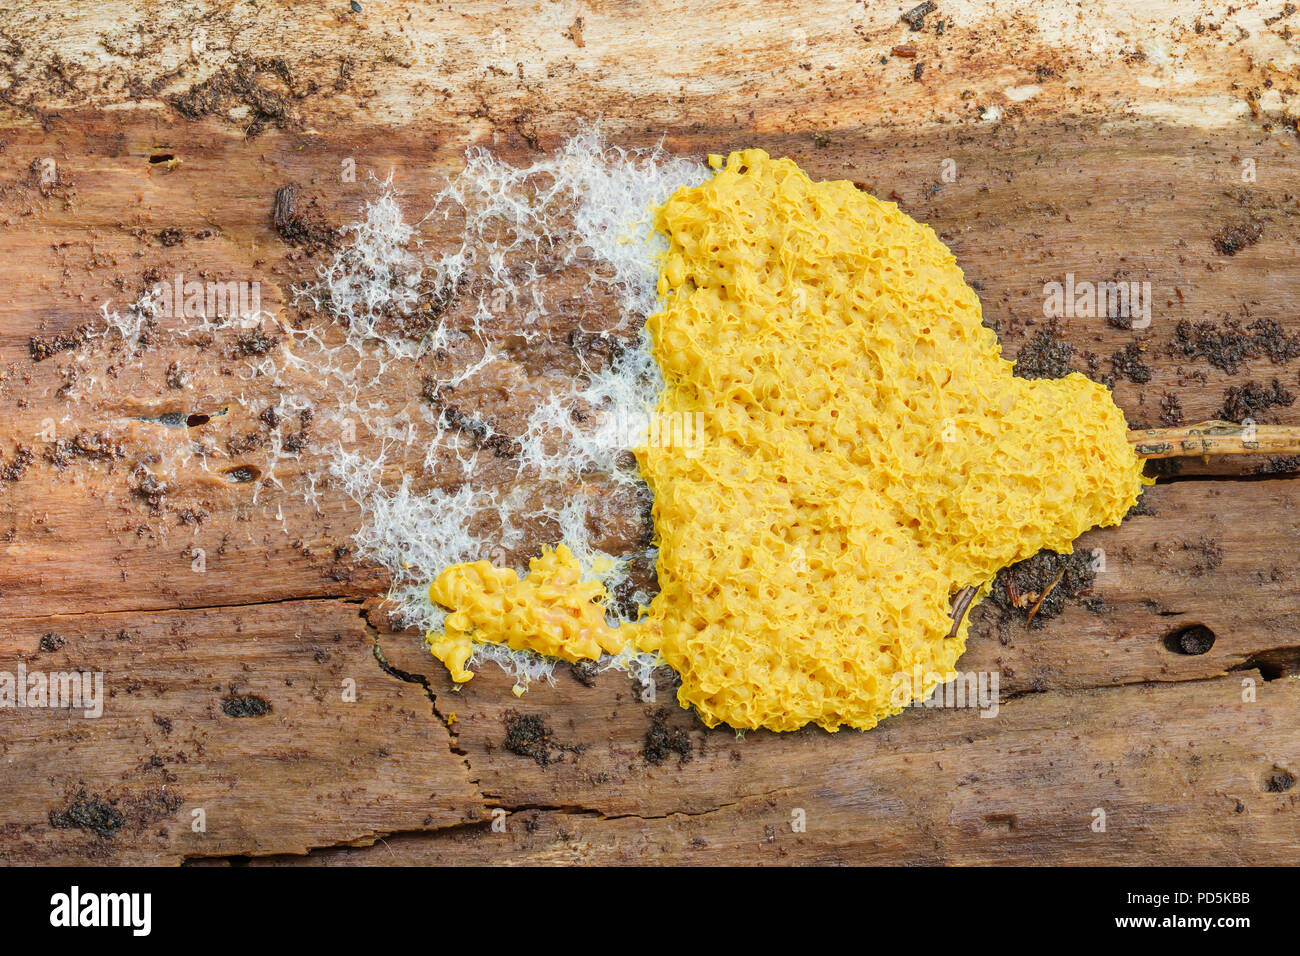 Scrambled Egg Slime Mold (Fuligo septica) on a rotting pine tree log. Stock Photo